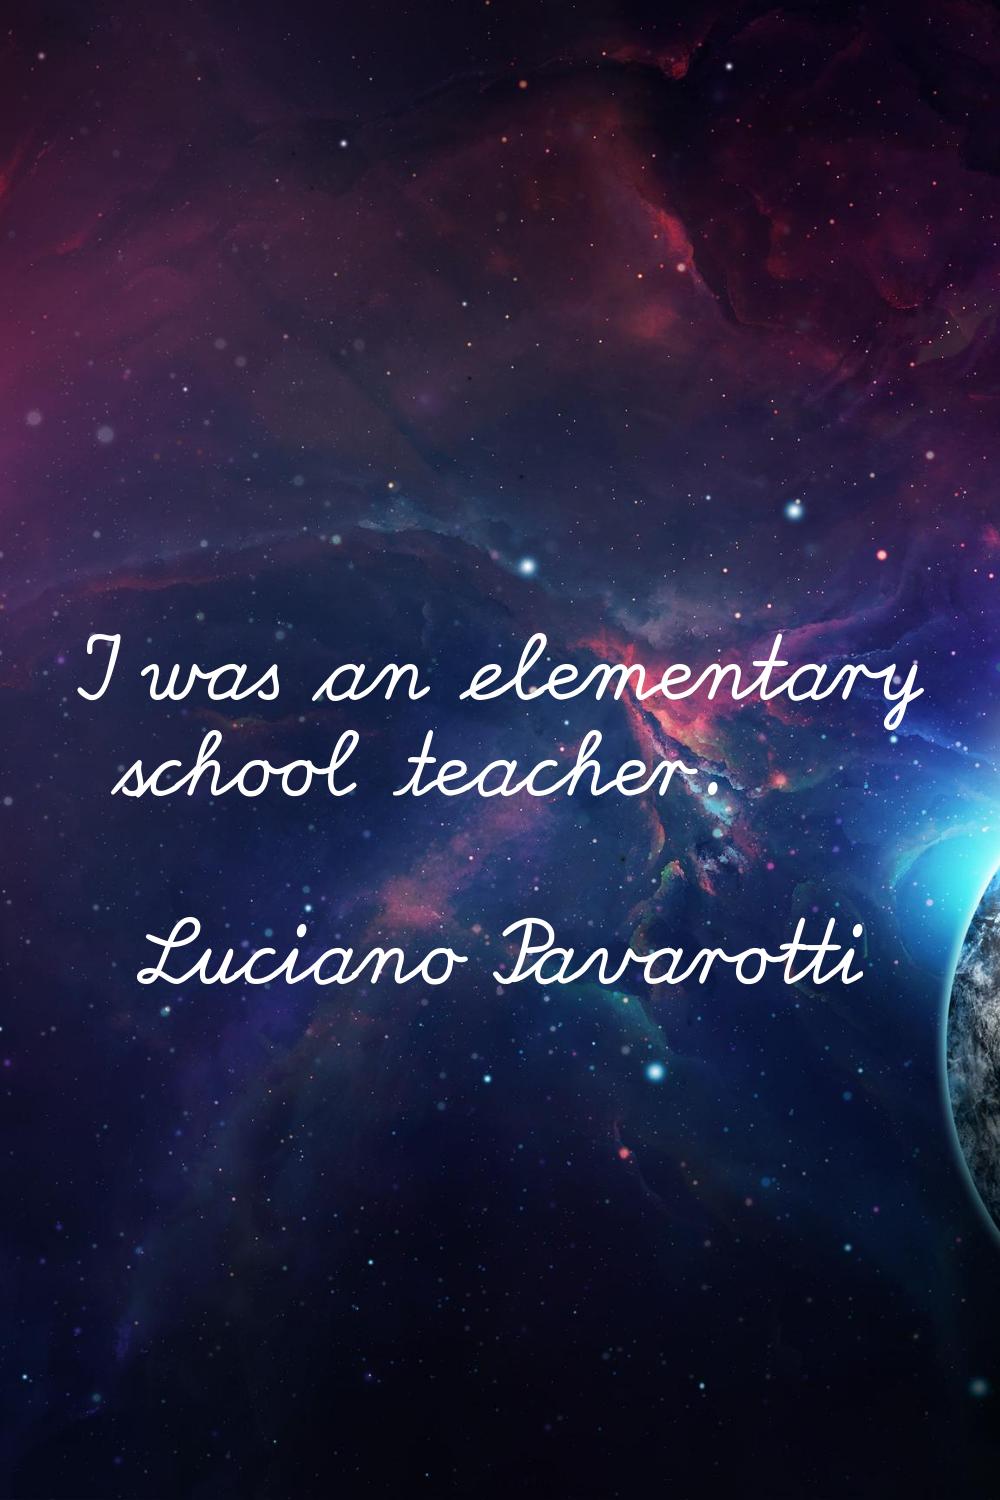 I was an elementary school teacher.